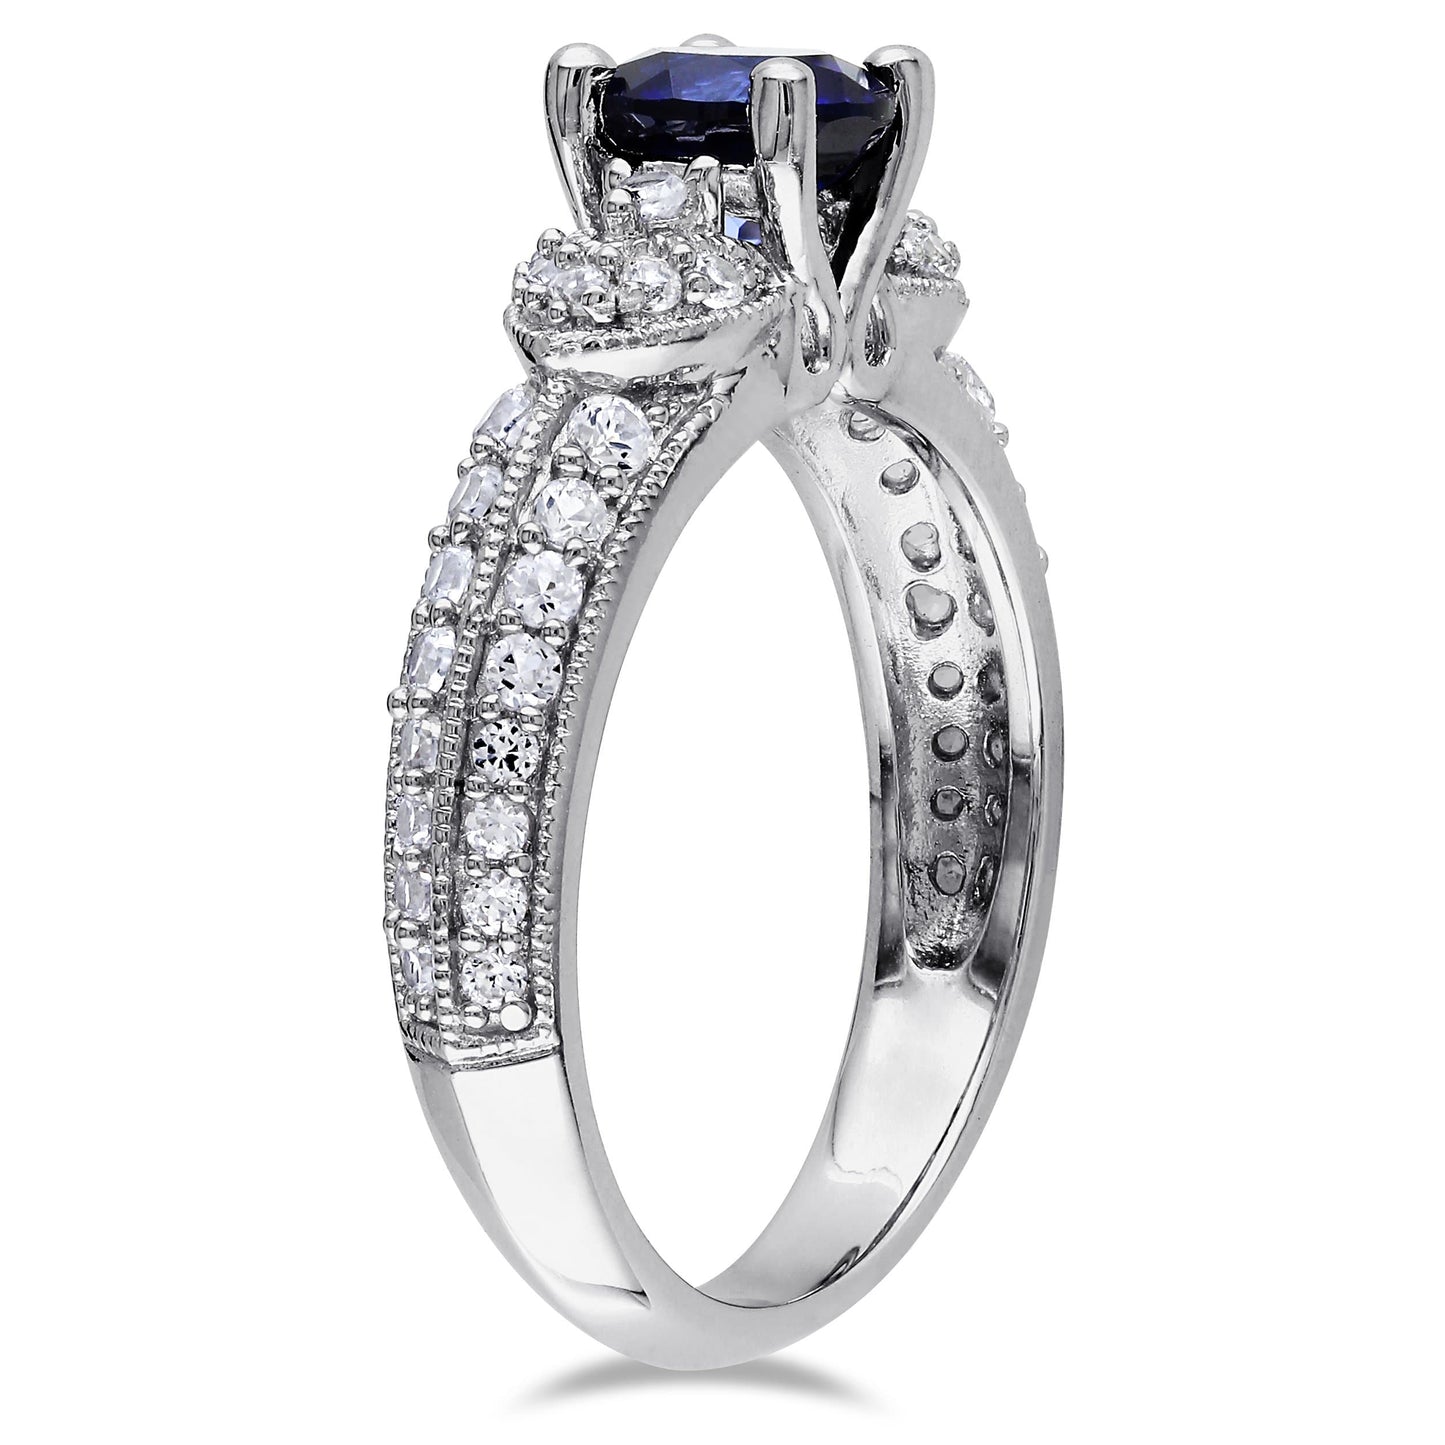 Sophia B 1 5/8ct Created Blue & White Sapphire Ring